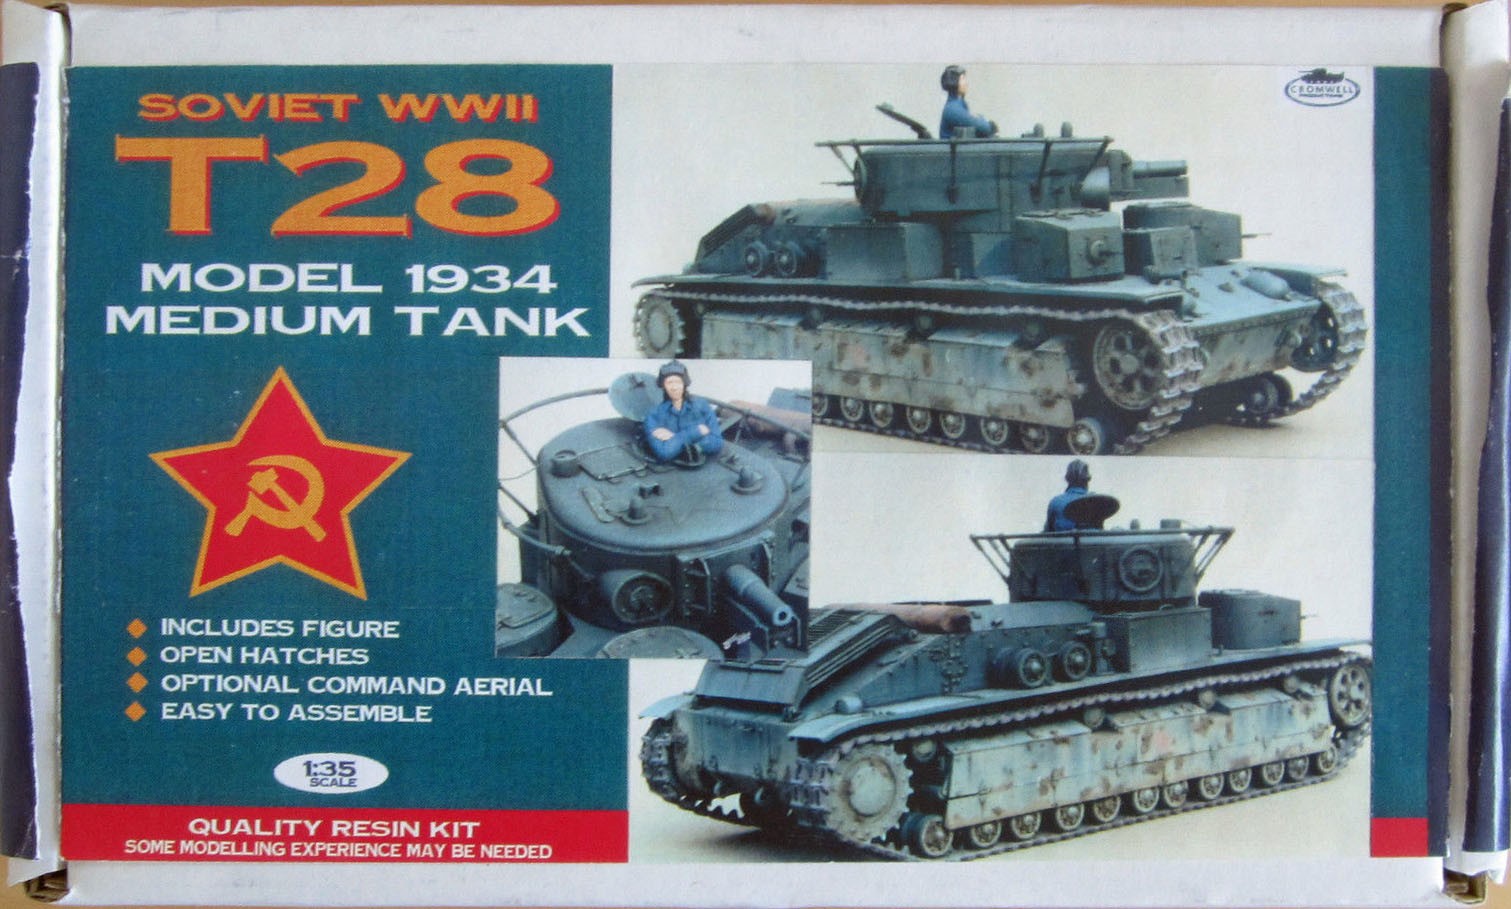 T28 Model 1934 Medium Tank Image